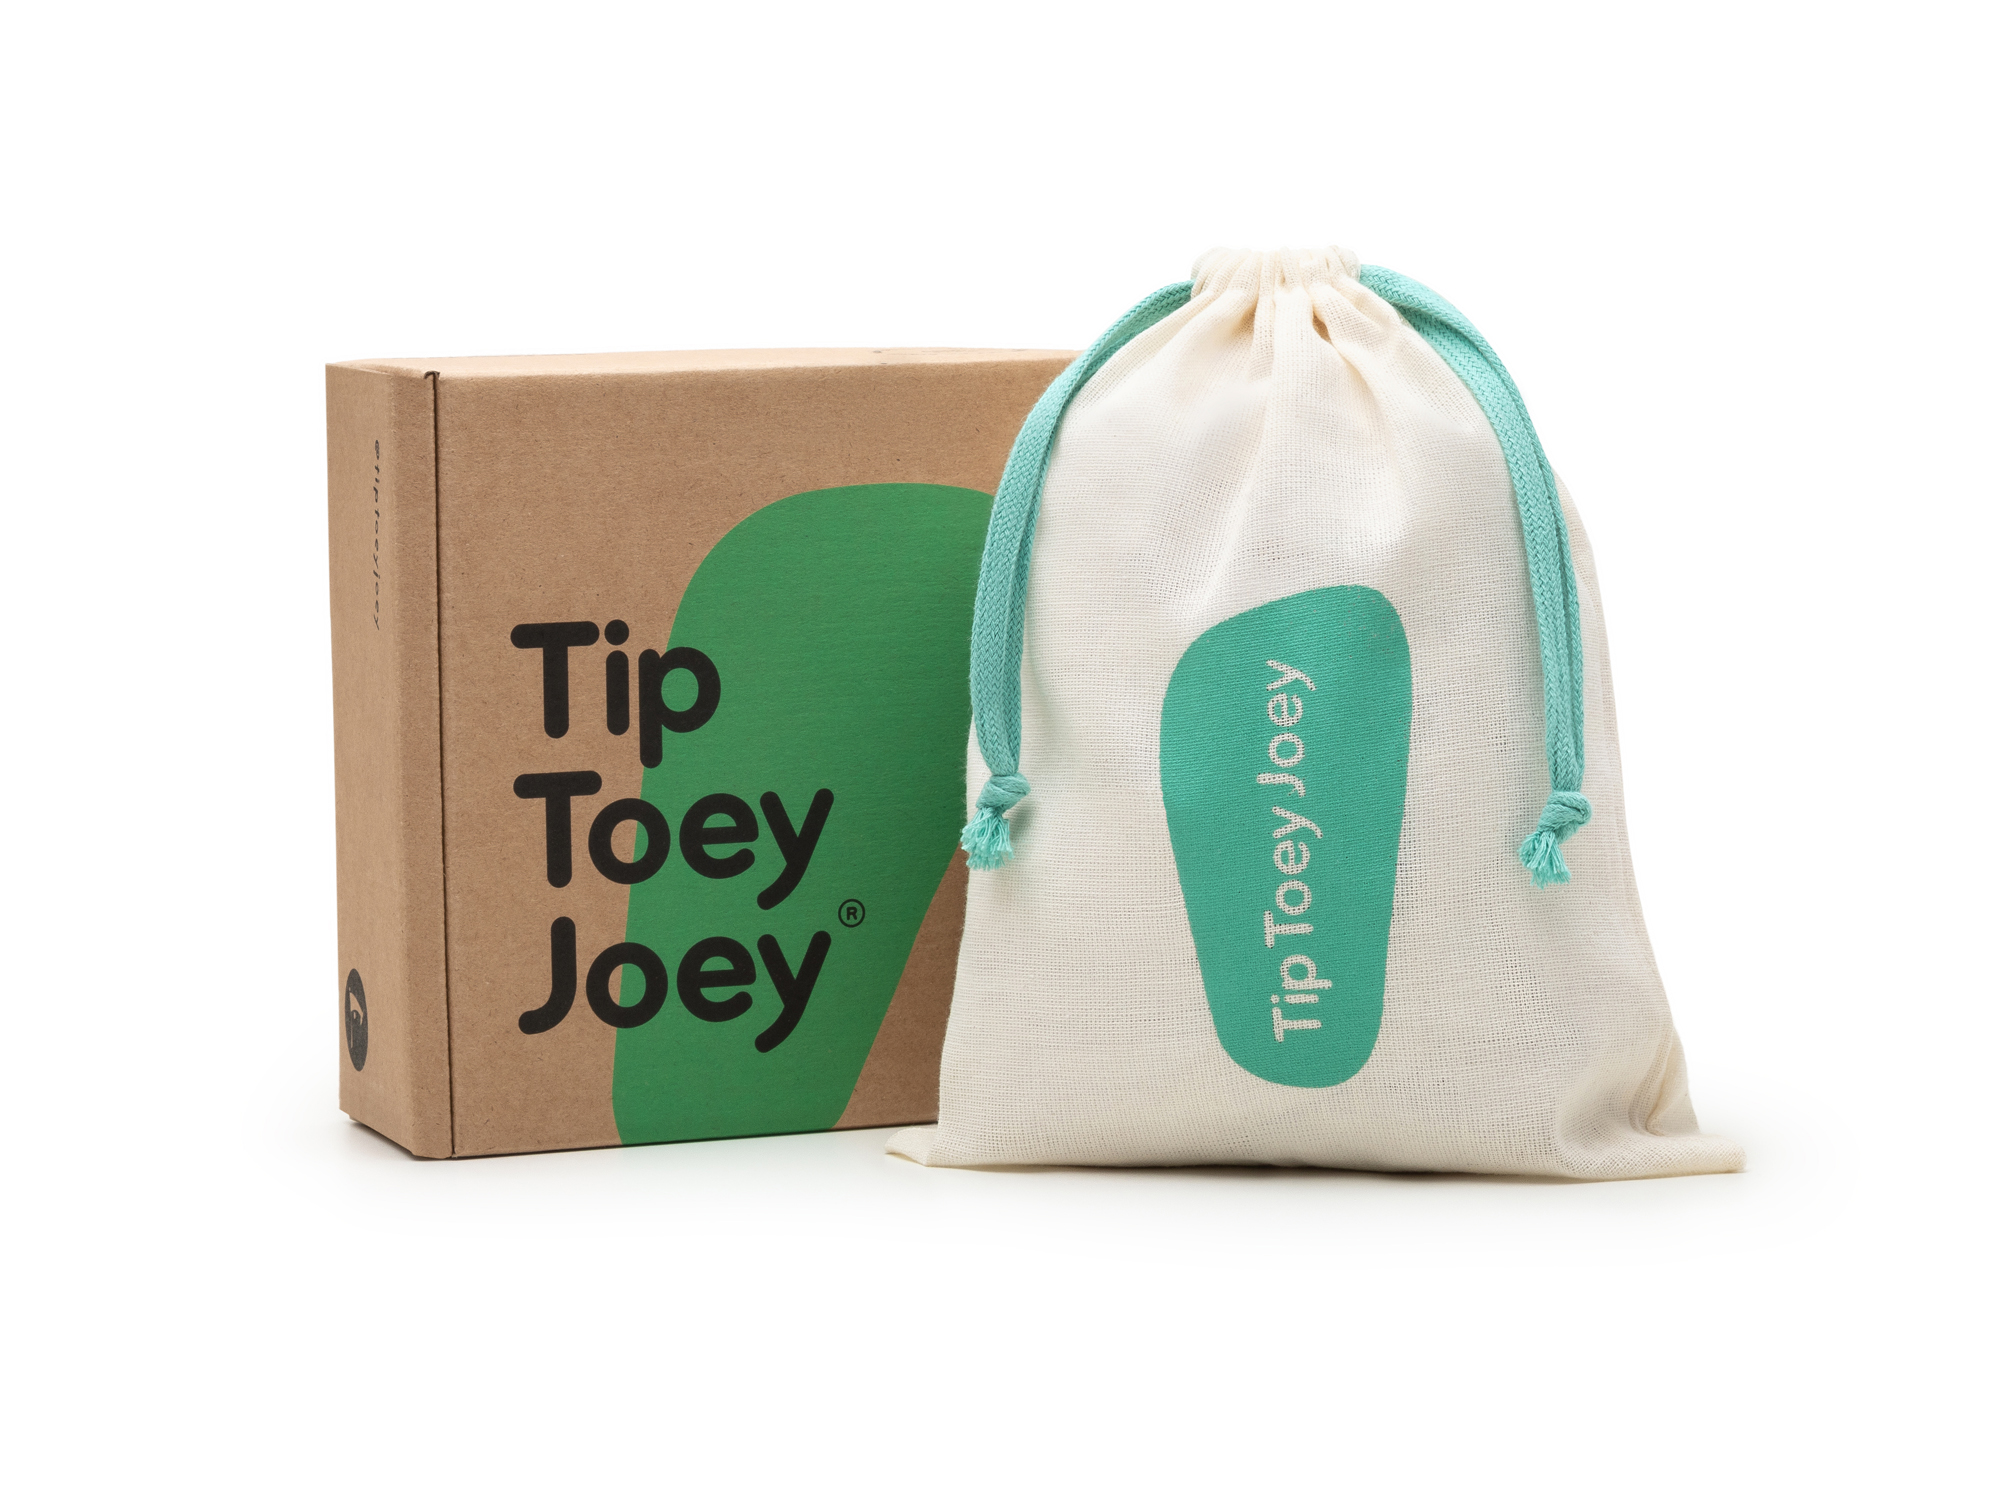 UP & GO Sneakers for Boys Urbany | Tip Toey Joey - Australia - 6